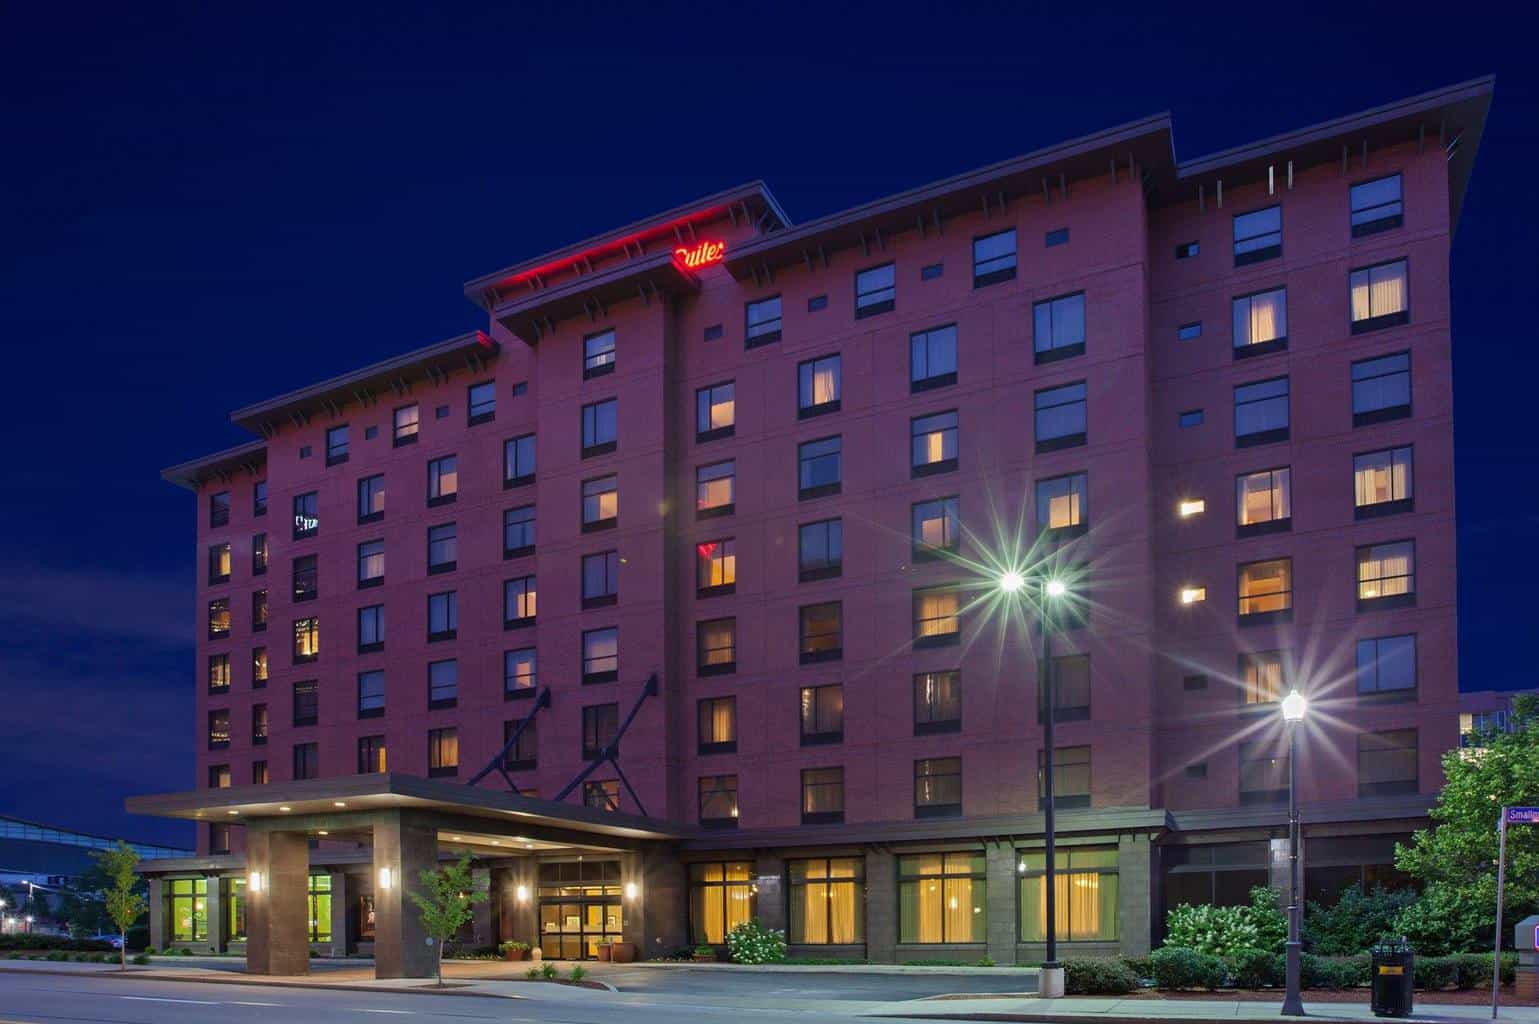 Hampton Inn and Suites Hotel Pittsburgh, Pennsylvania